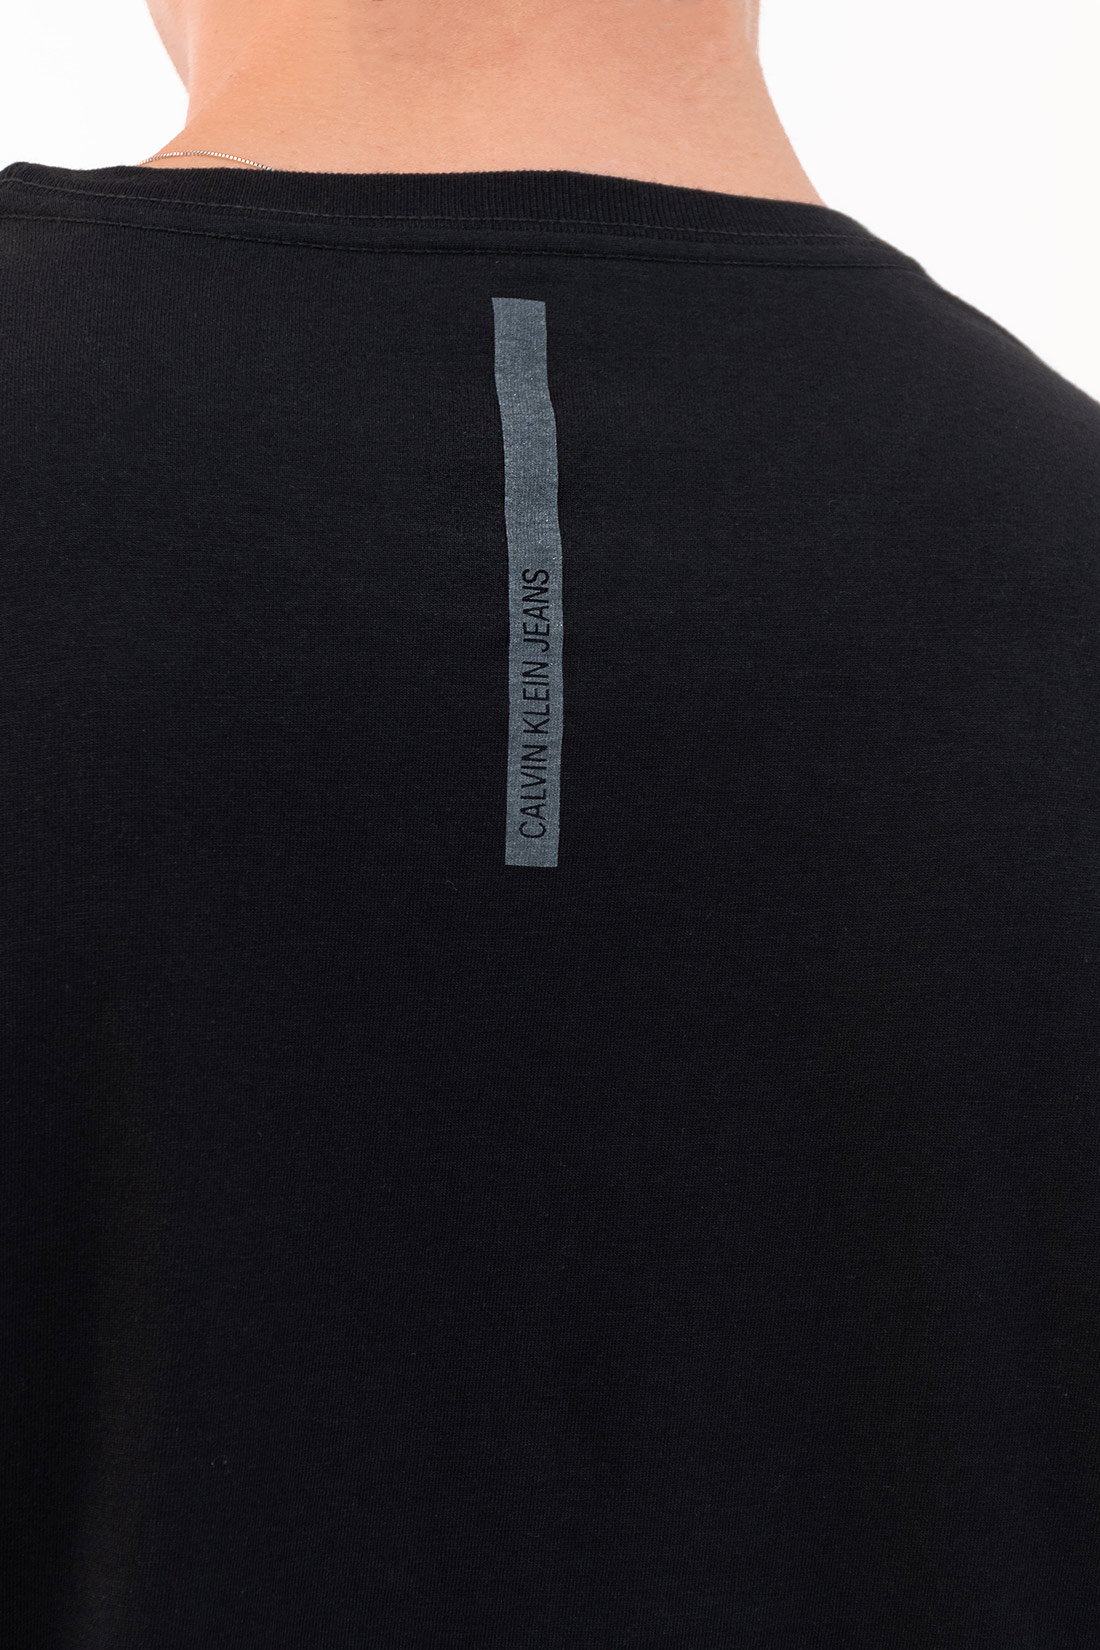 Camiseta Mc Calvin Klein Logo Retangulo